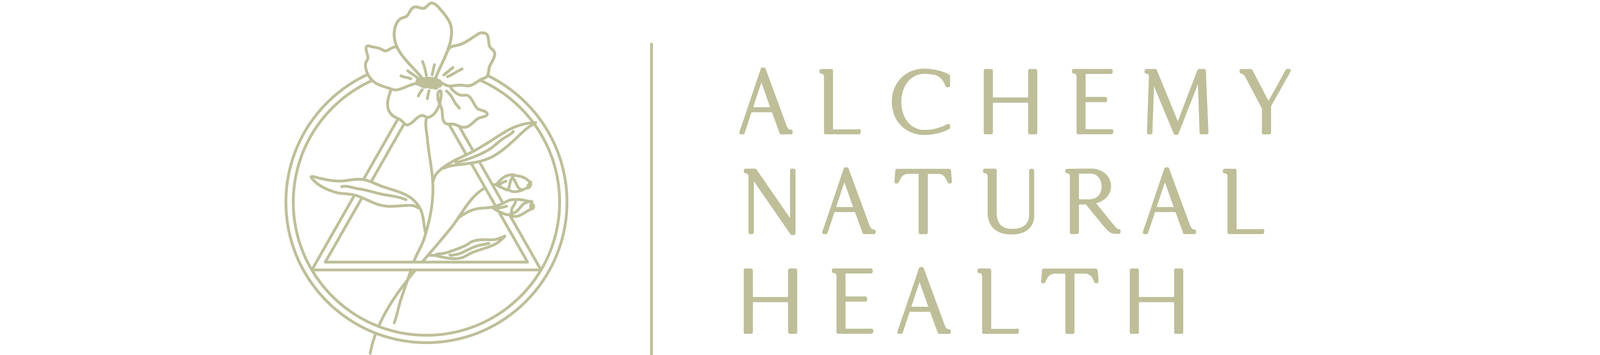 Alchemy Natural Health